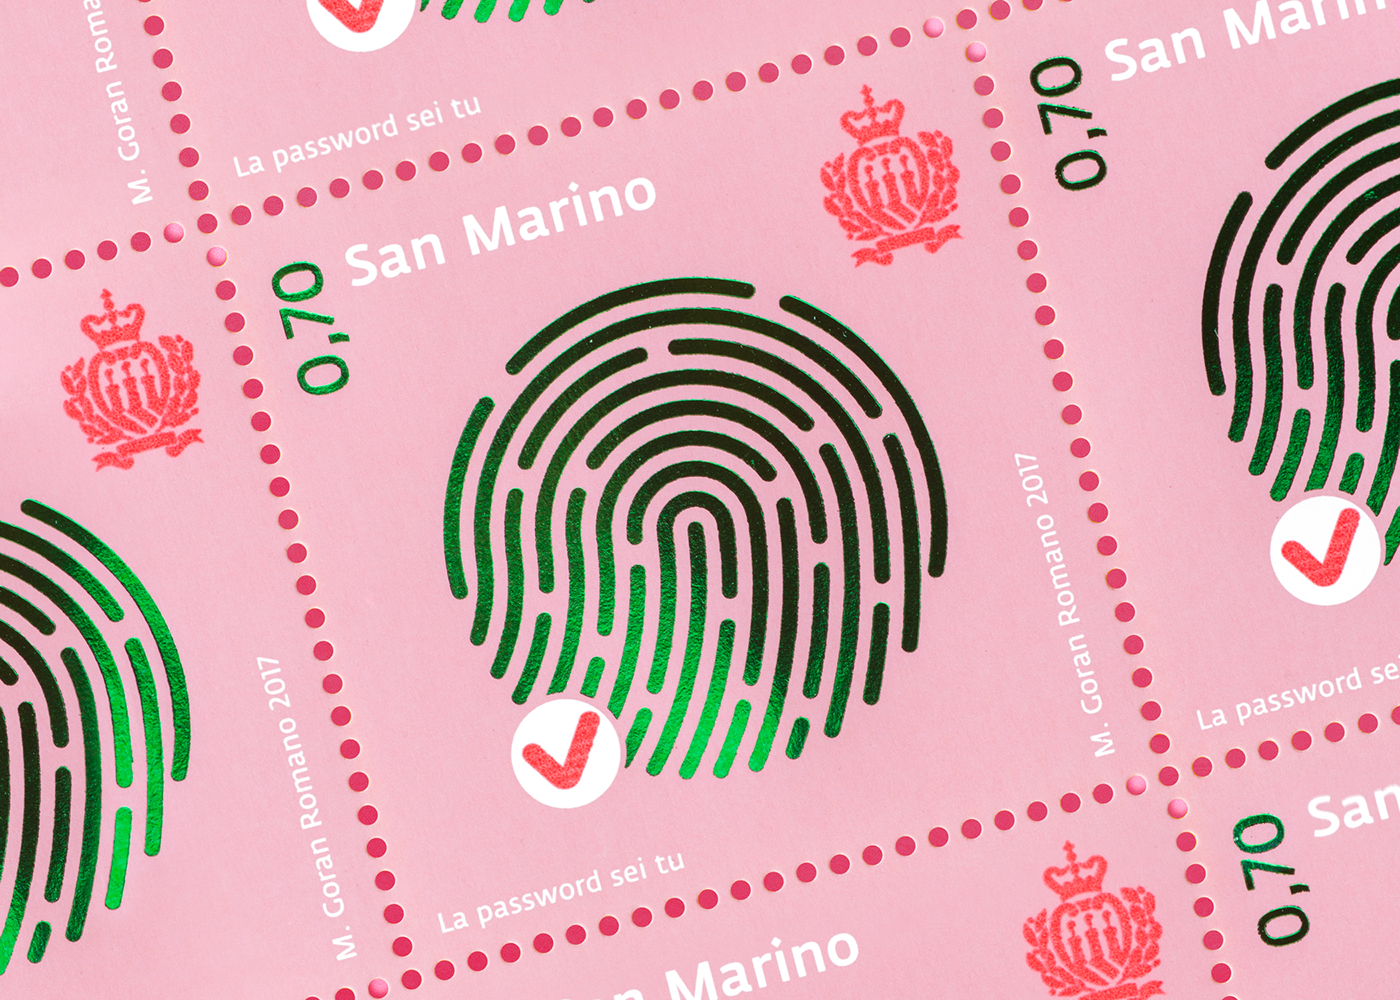 stamps FRANCOBOLLI   San Marino biometric password Password Cyber Security philatelic